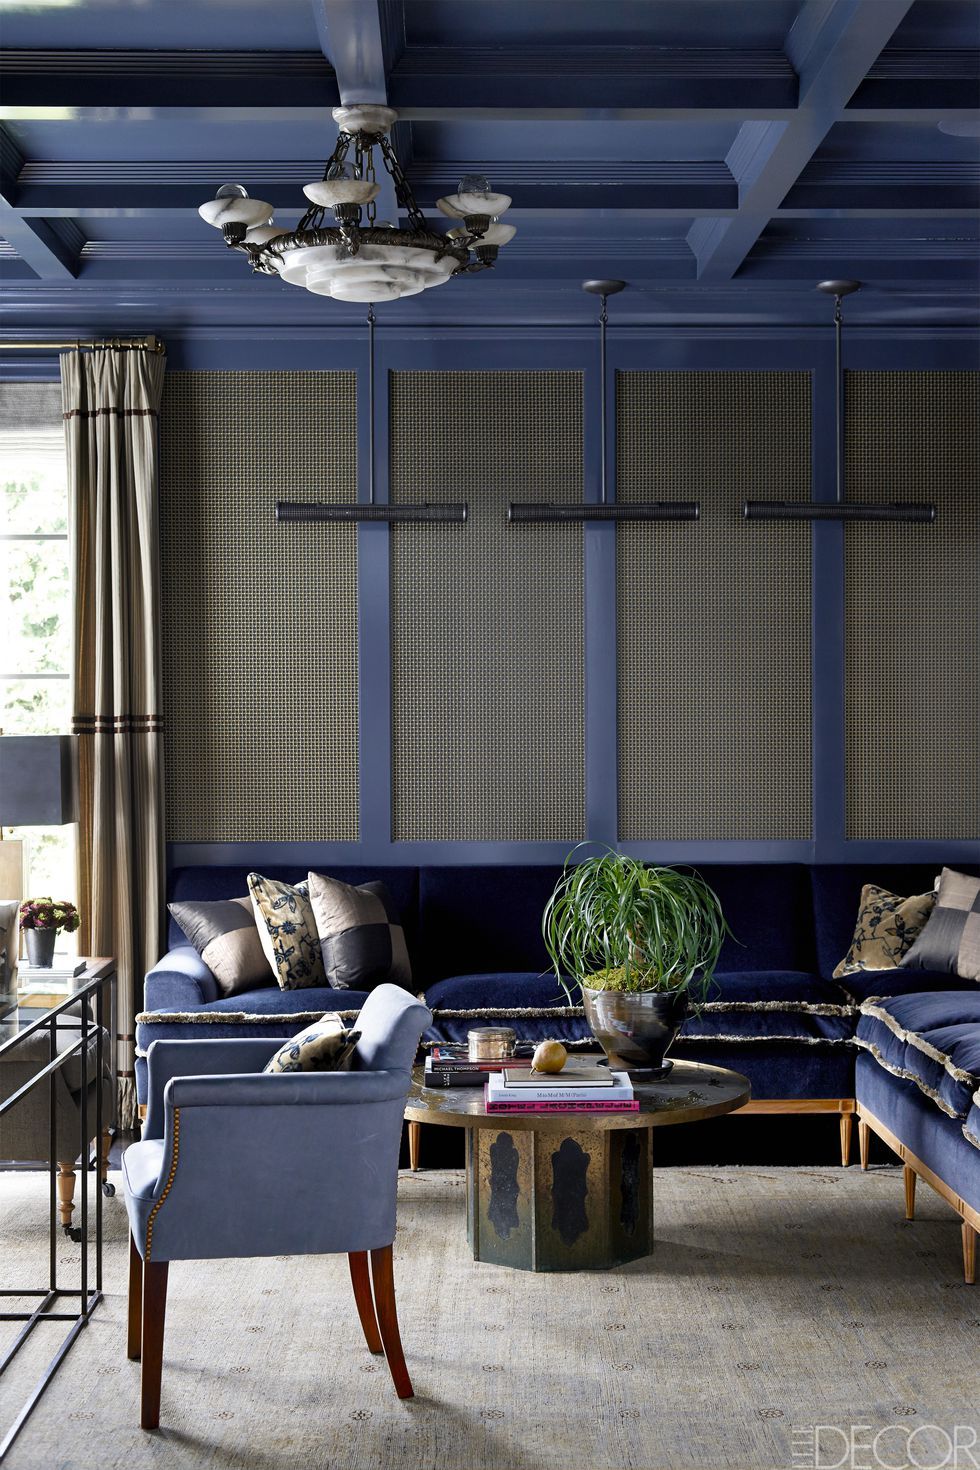 26 Stunning Ceiling Design Ideas Best Ceiling Decor Paint Patterns